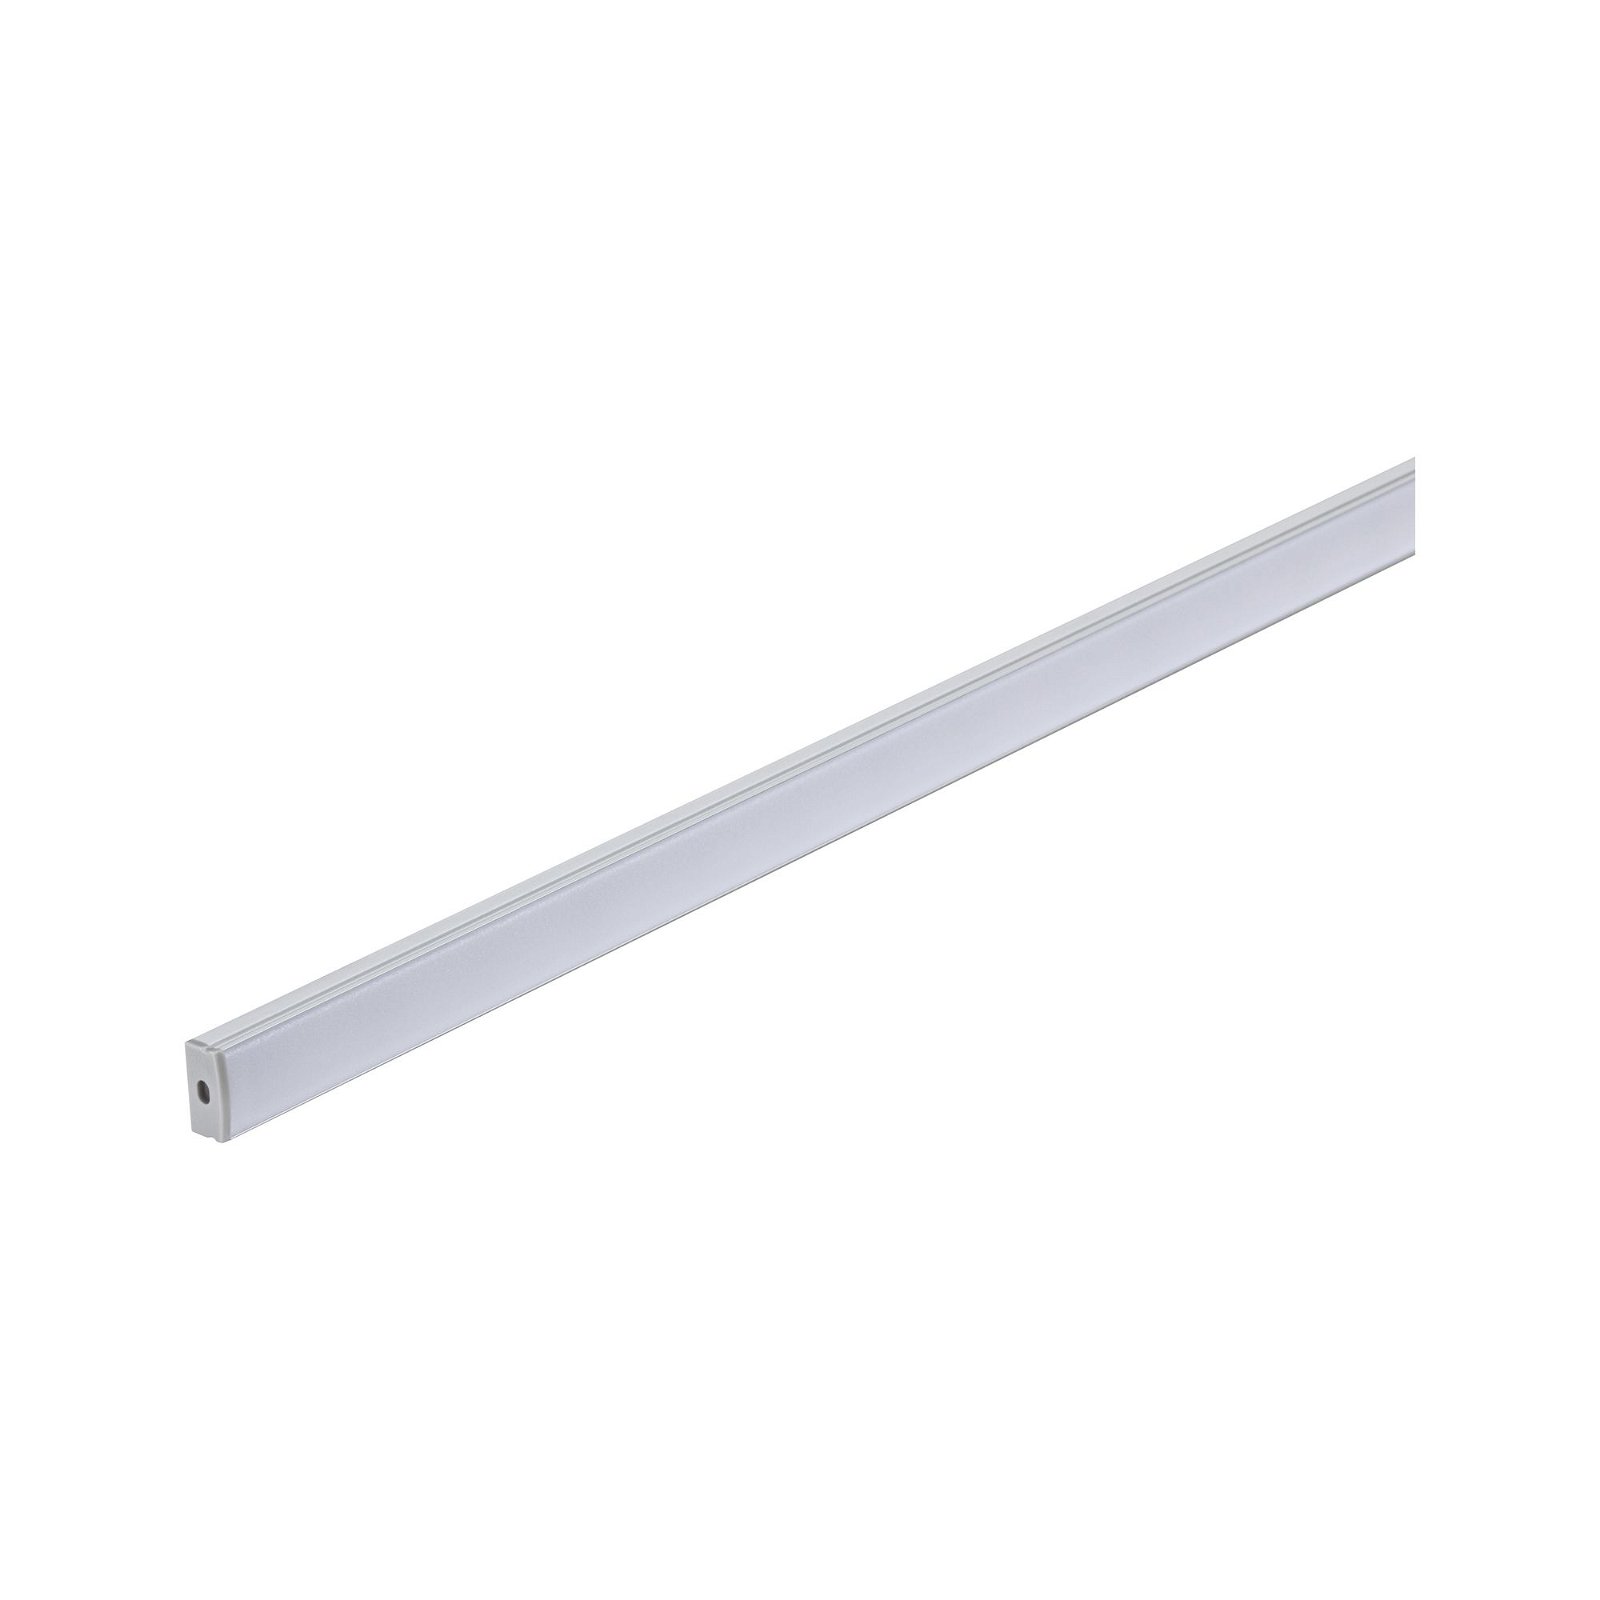 LED Strip Profil Base Weißer Diffusor 2m Alu eloxiert/Satin